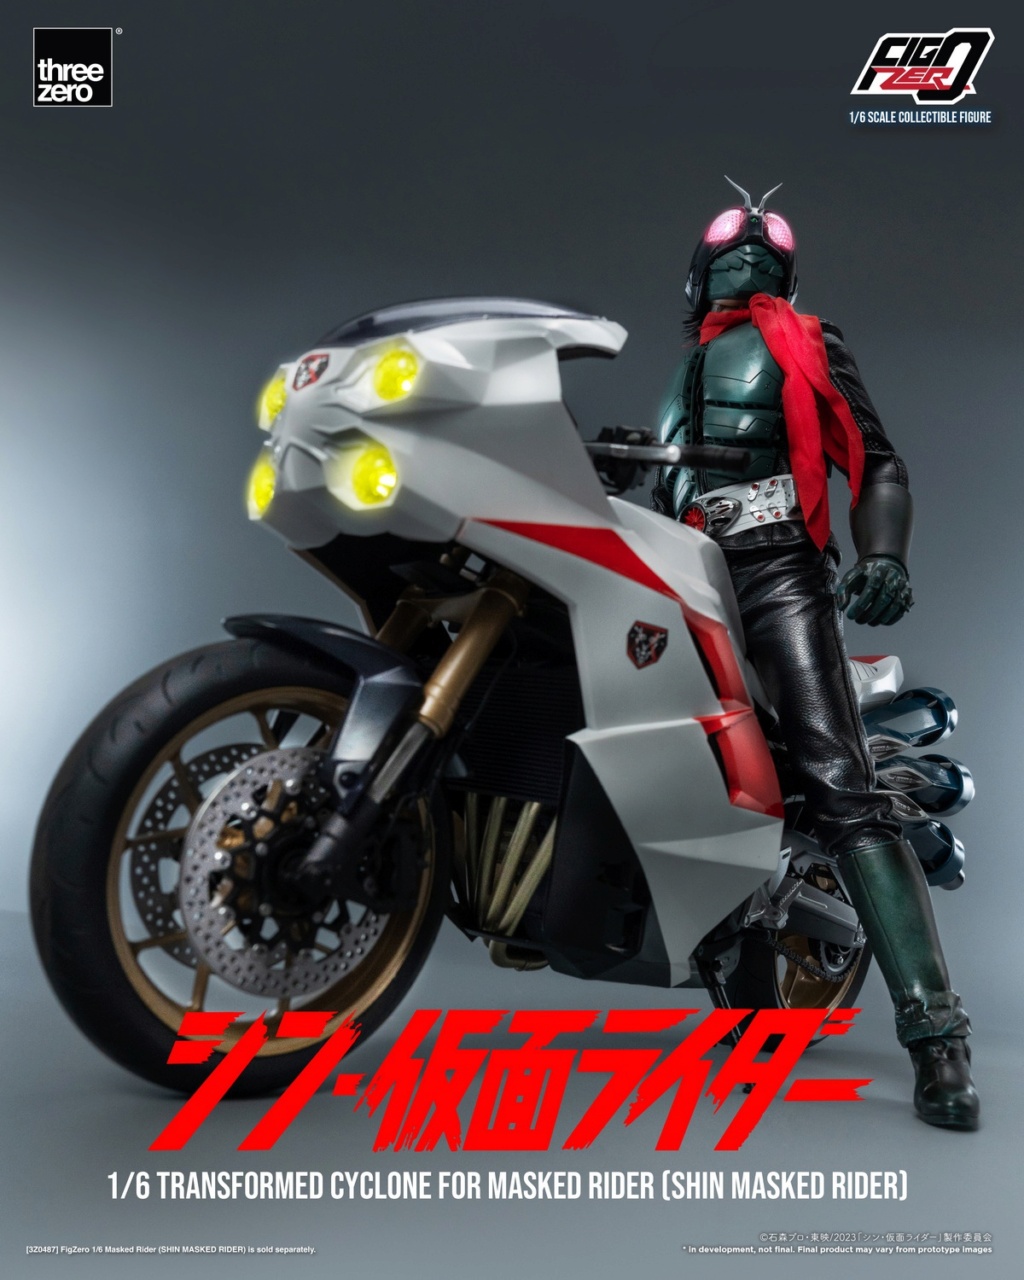 accessory - NEW PRODUCT: Threezero: FigZero 1/6 Shin Masked Rider Motorcycle (Transformed Cyclone) 18374210